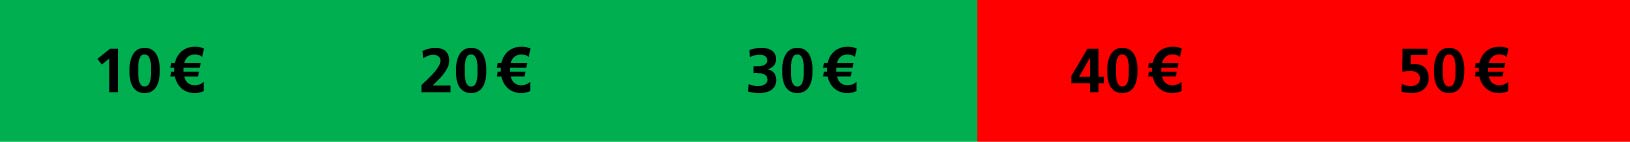 50er 30 Euro